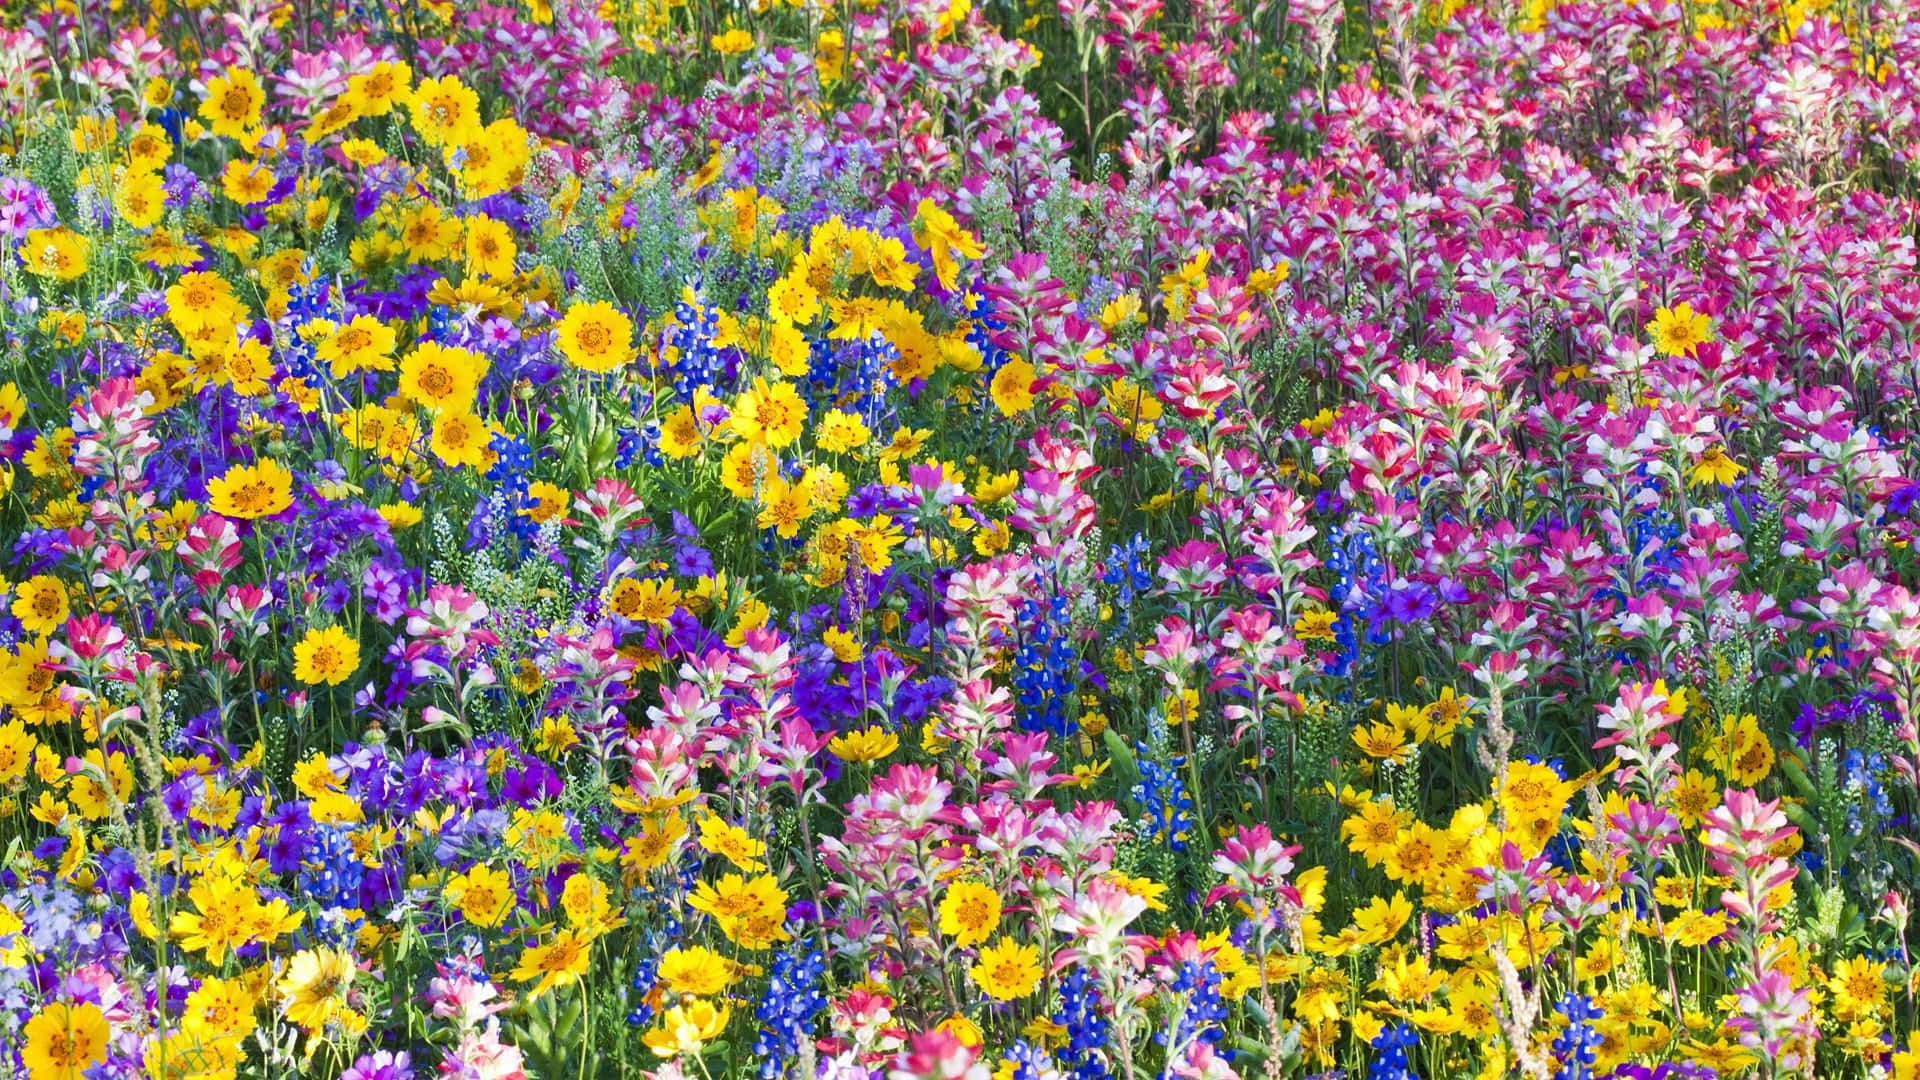 Enchanting Wildflower Field in Full Bloom